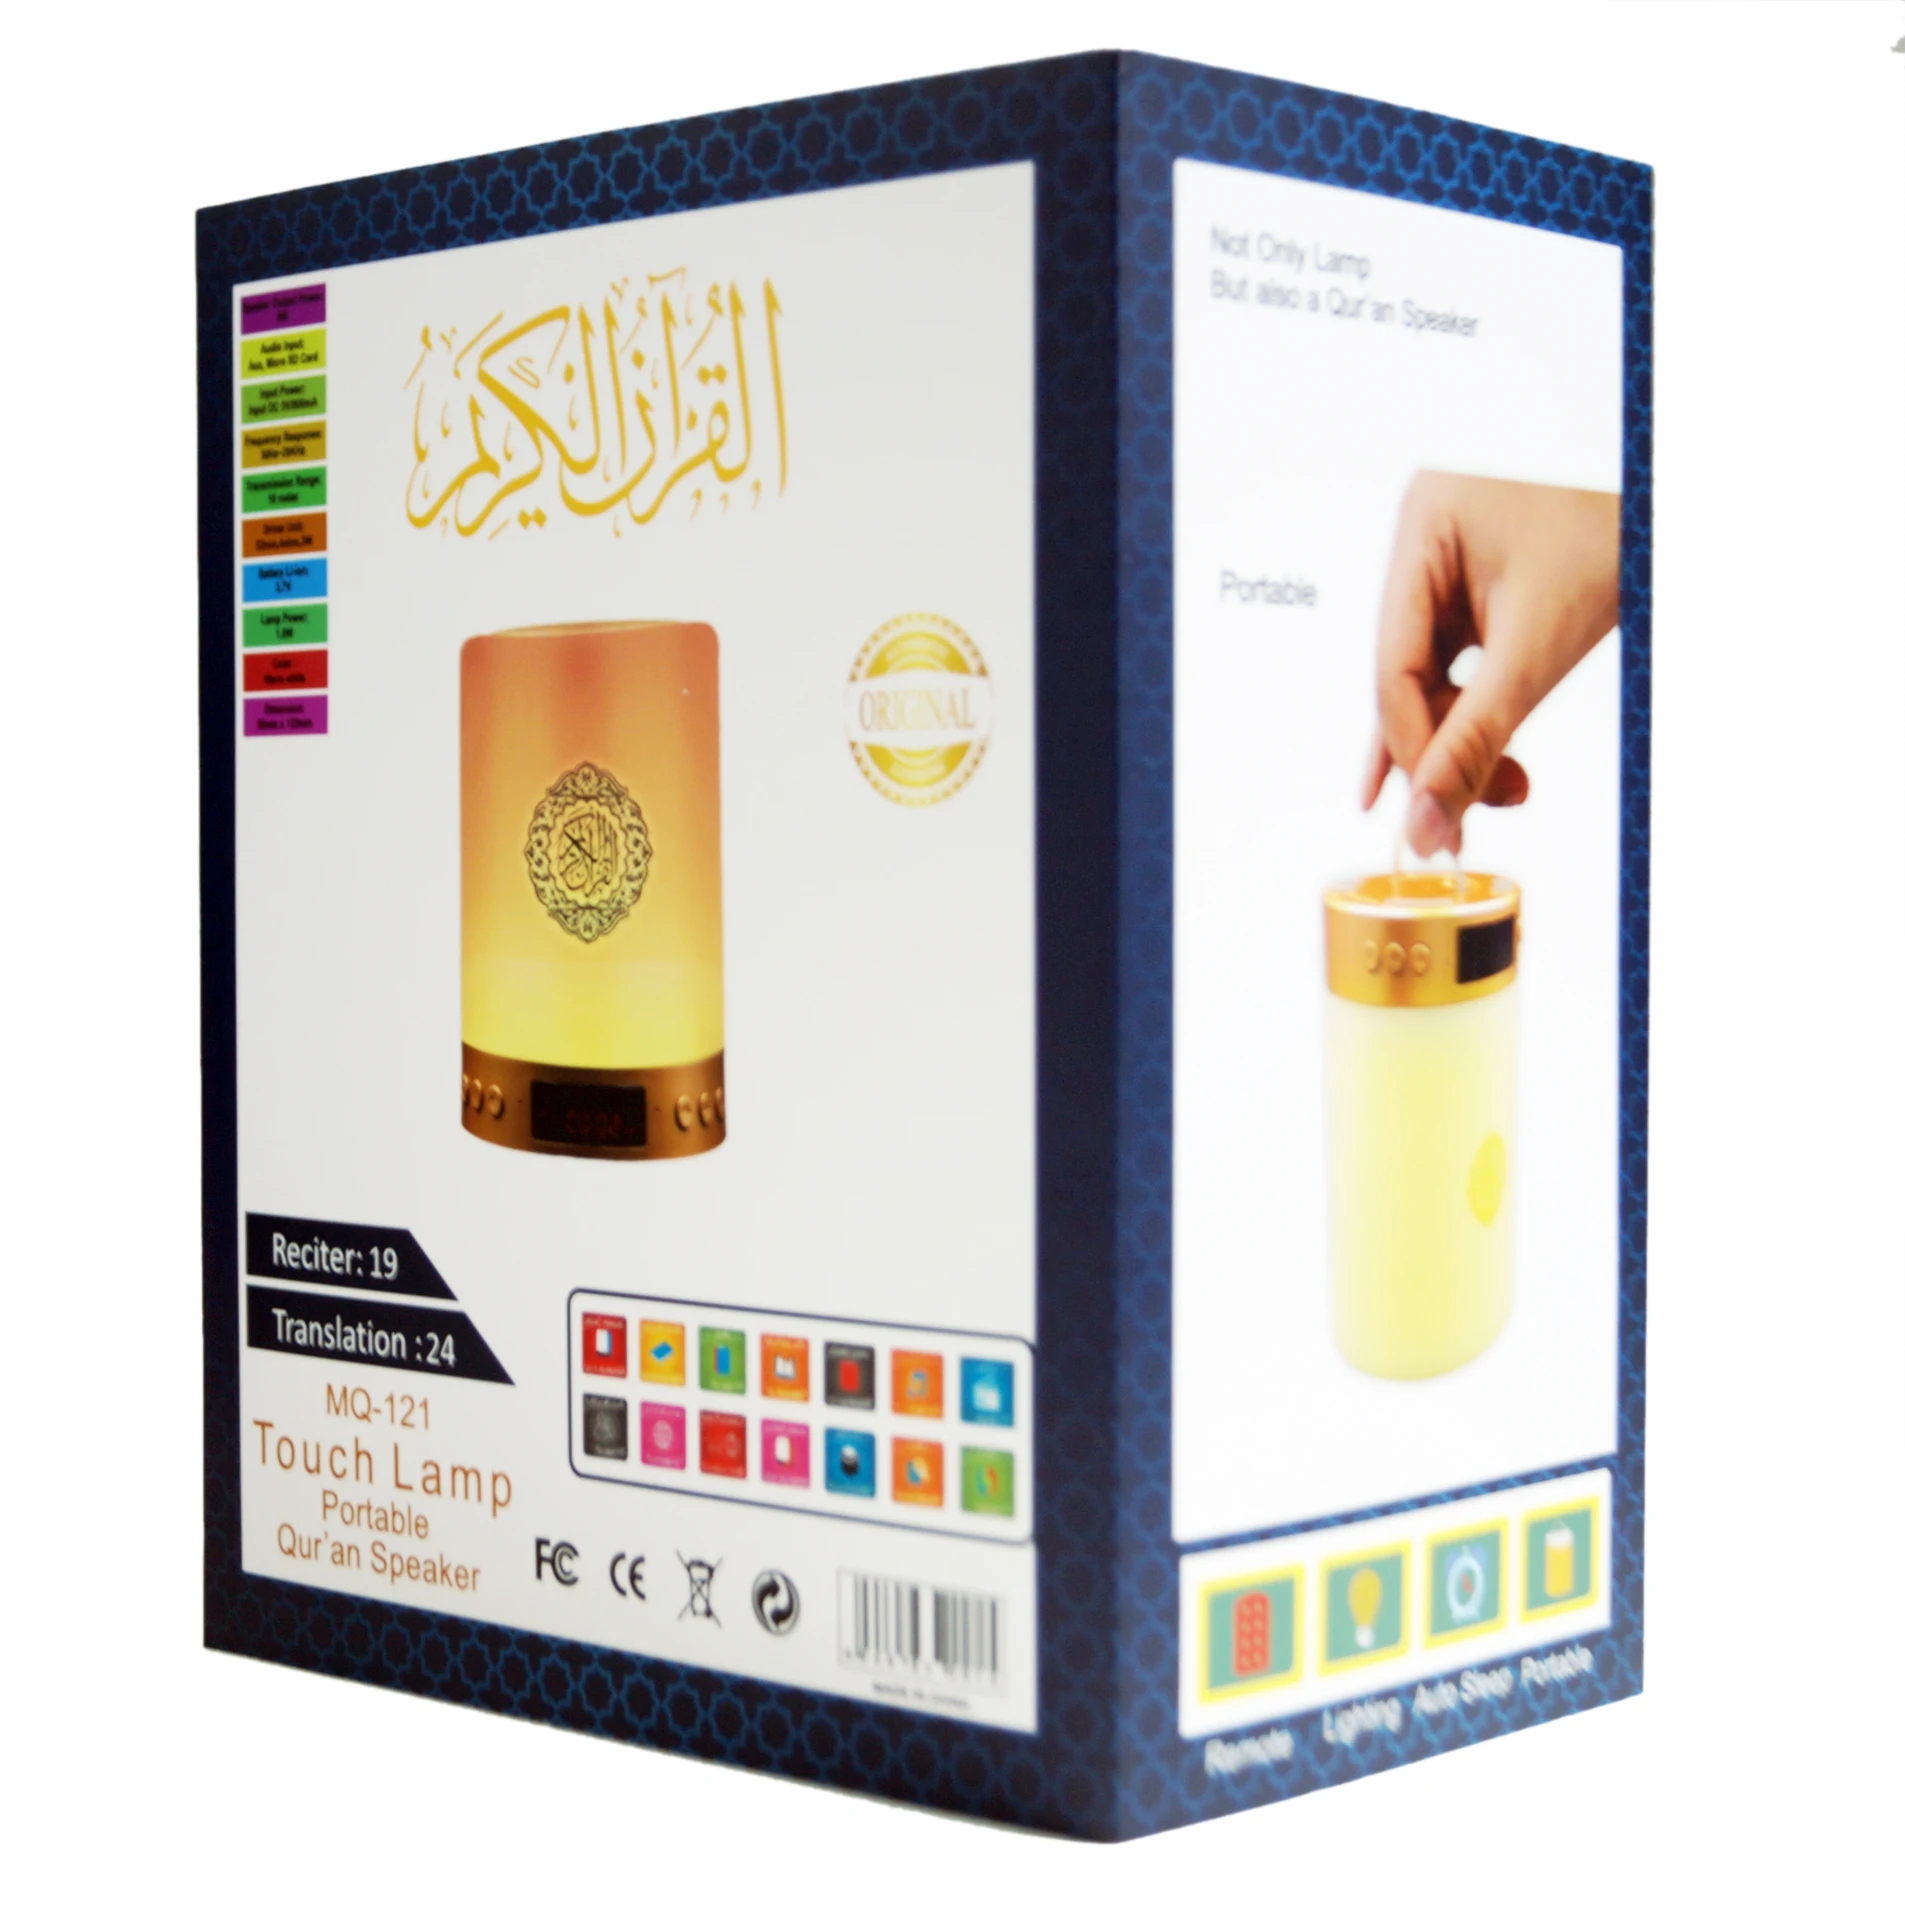 

Quran Speaker MQ-121 Azan Time 8GB/16GB Quran MP3 Player, White+gold